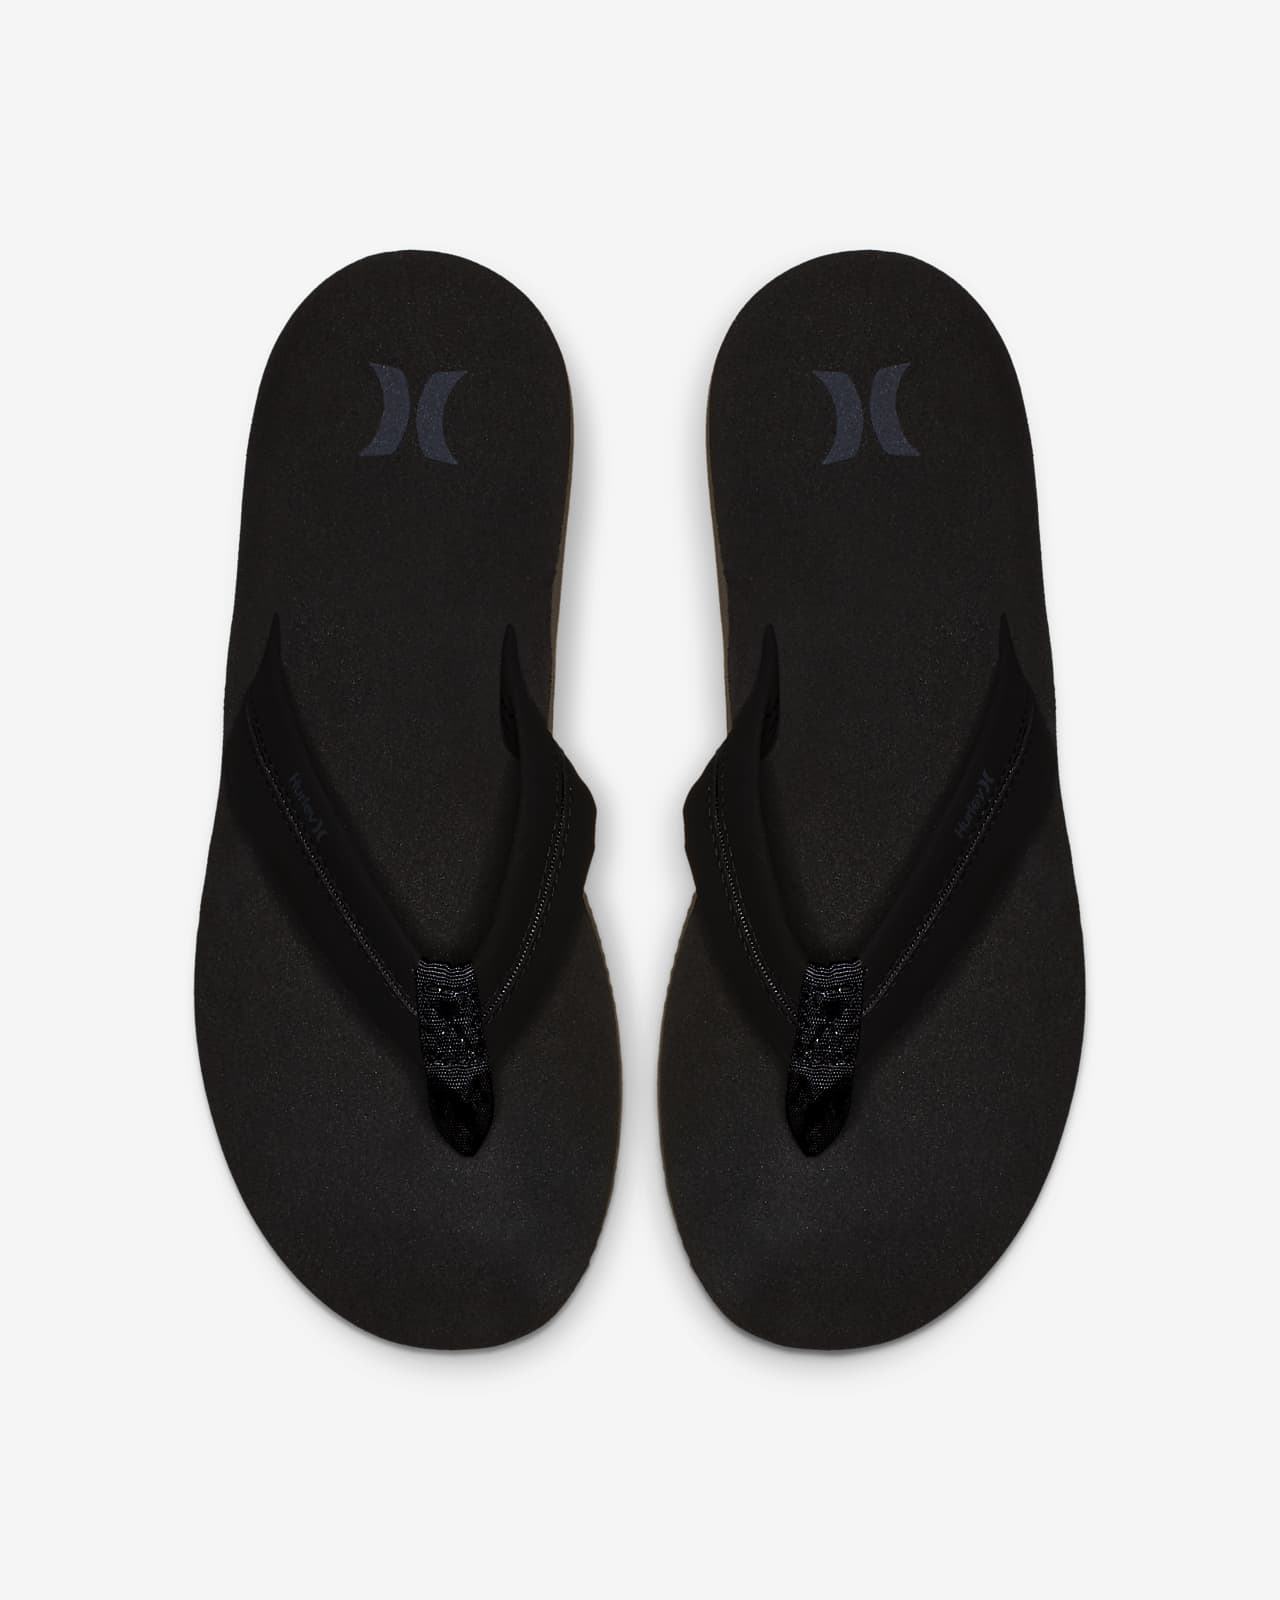 Hurley Lunar Men's Sandals. Nike.com